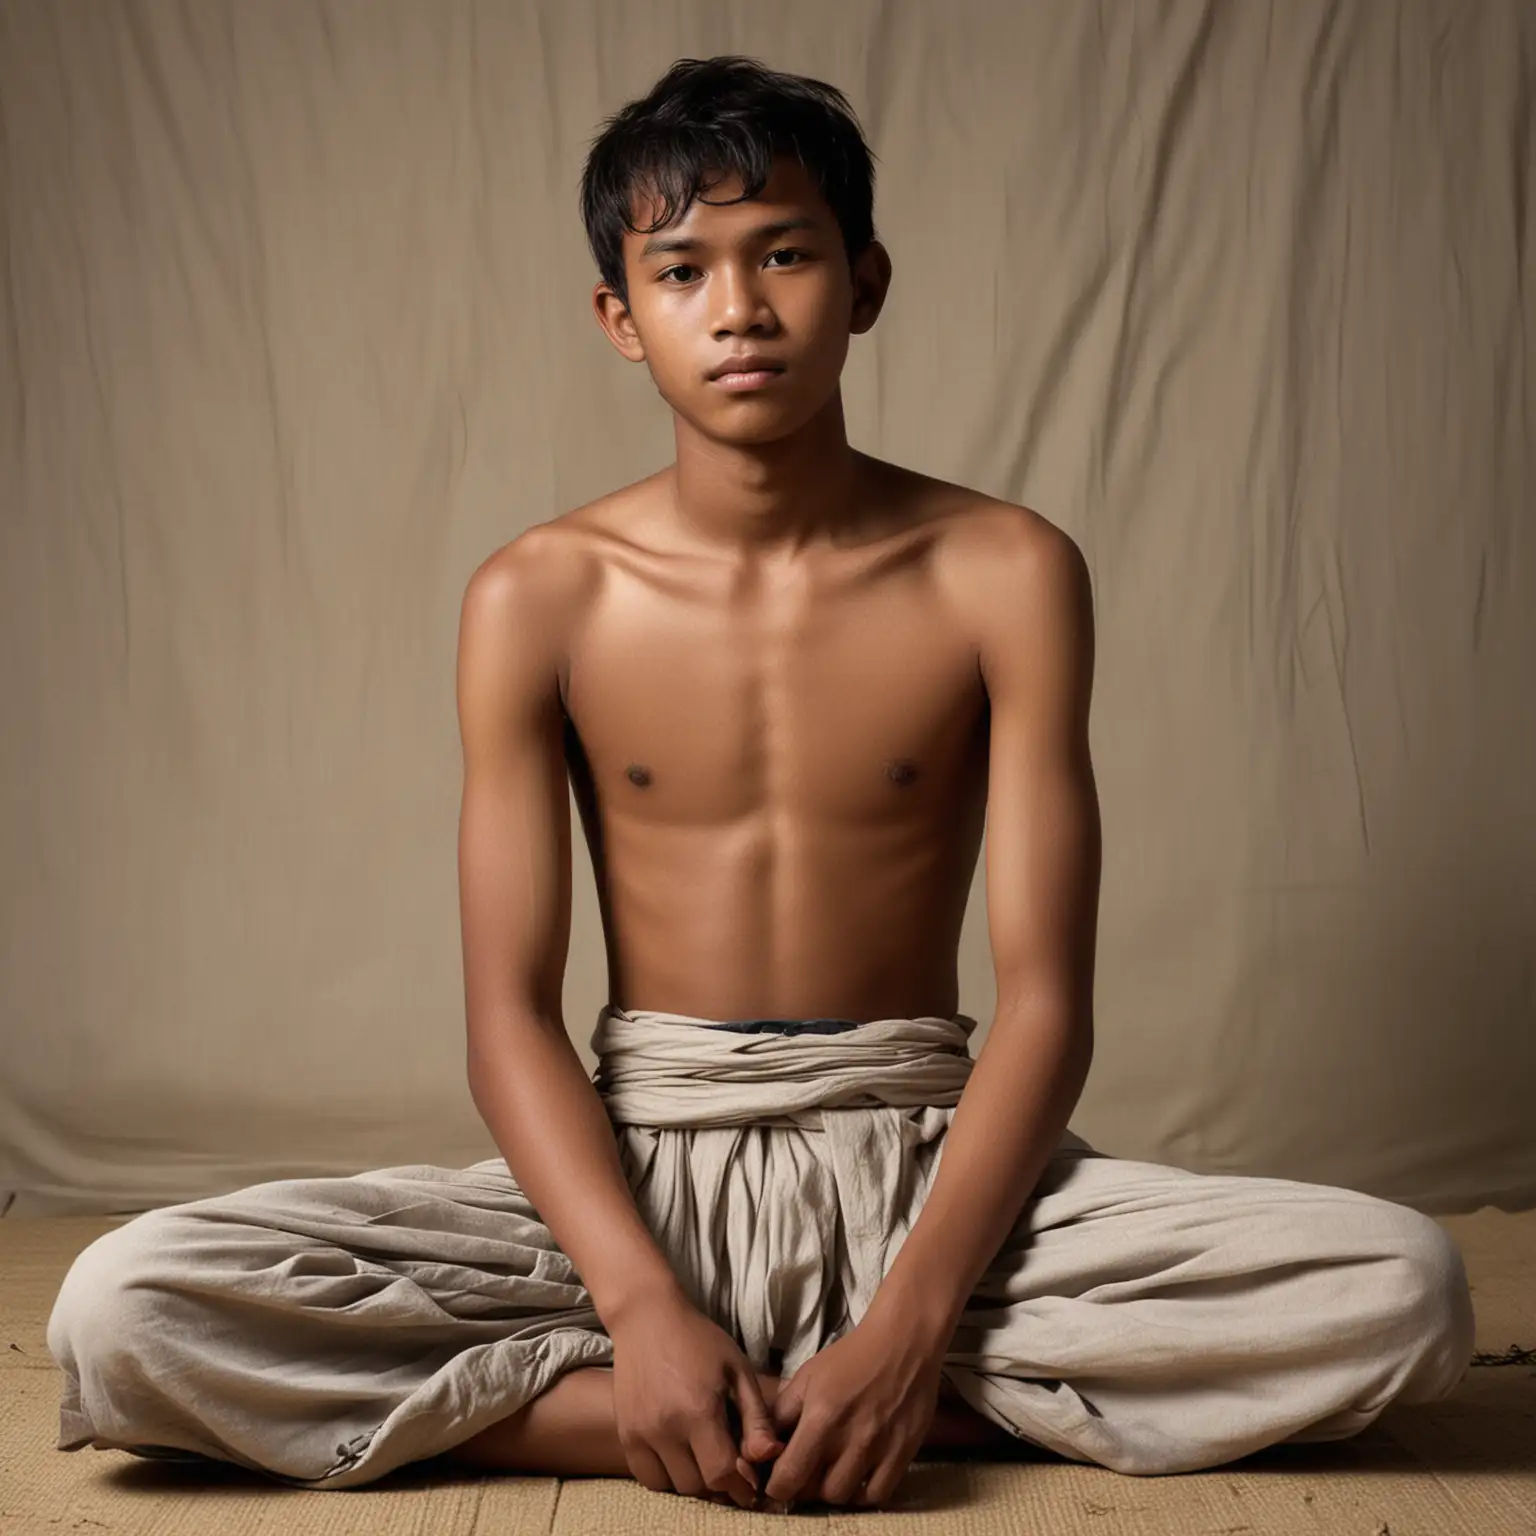 16 year old Indonesian man bare chested, wearing a long cloth, dark skin, sitting cross-legged 